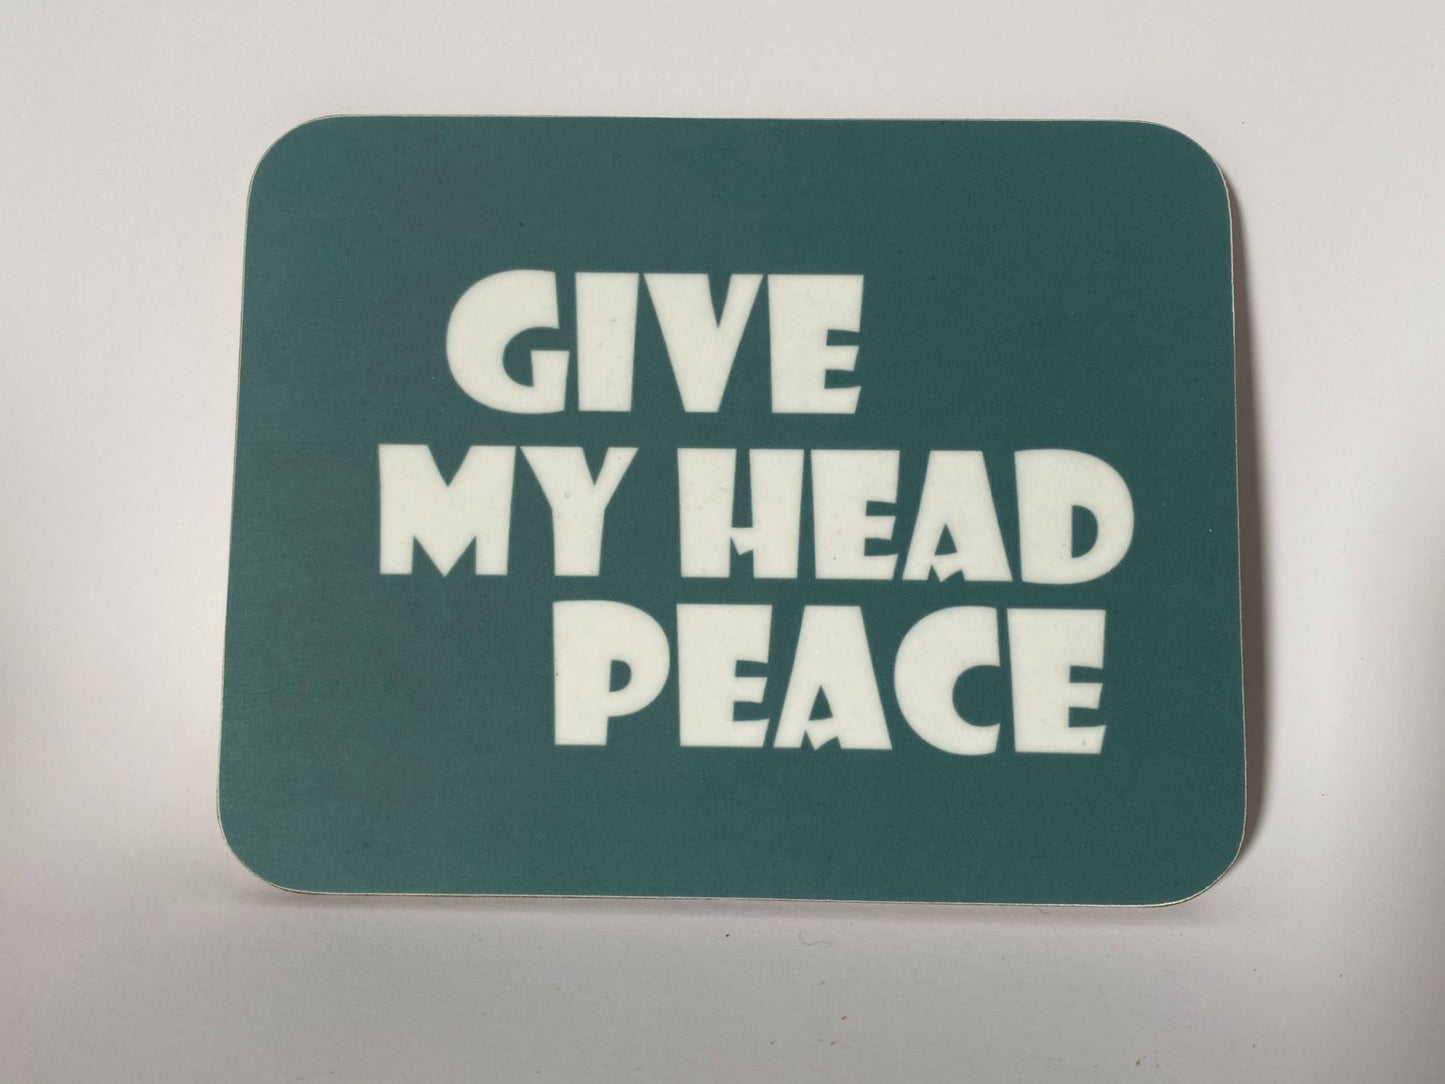 Give my head peace